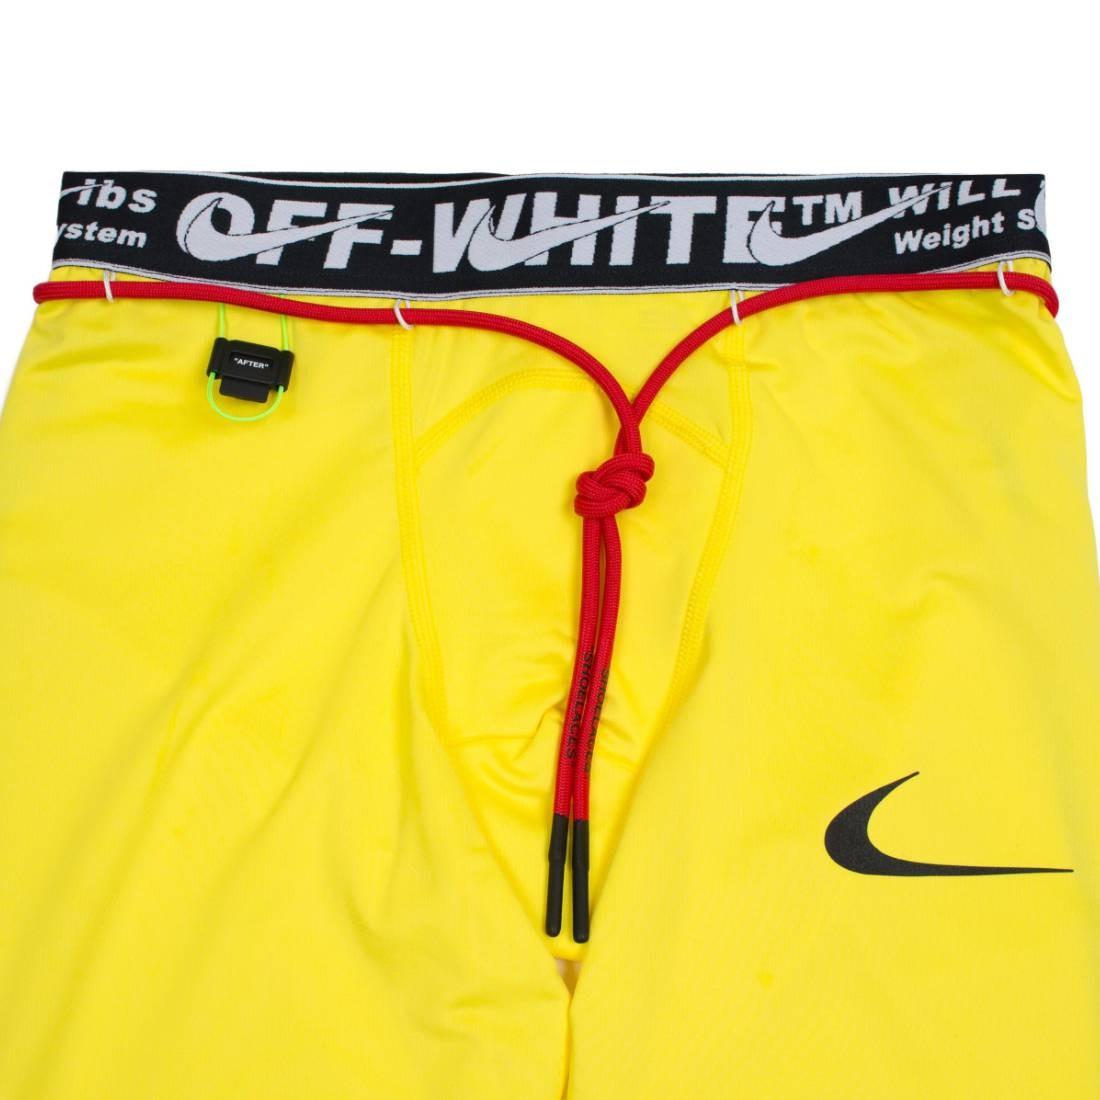 Nike Men's Pro Tights Black/Anthracite/White Size X-Large